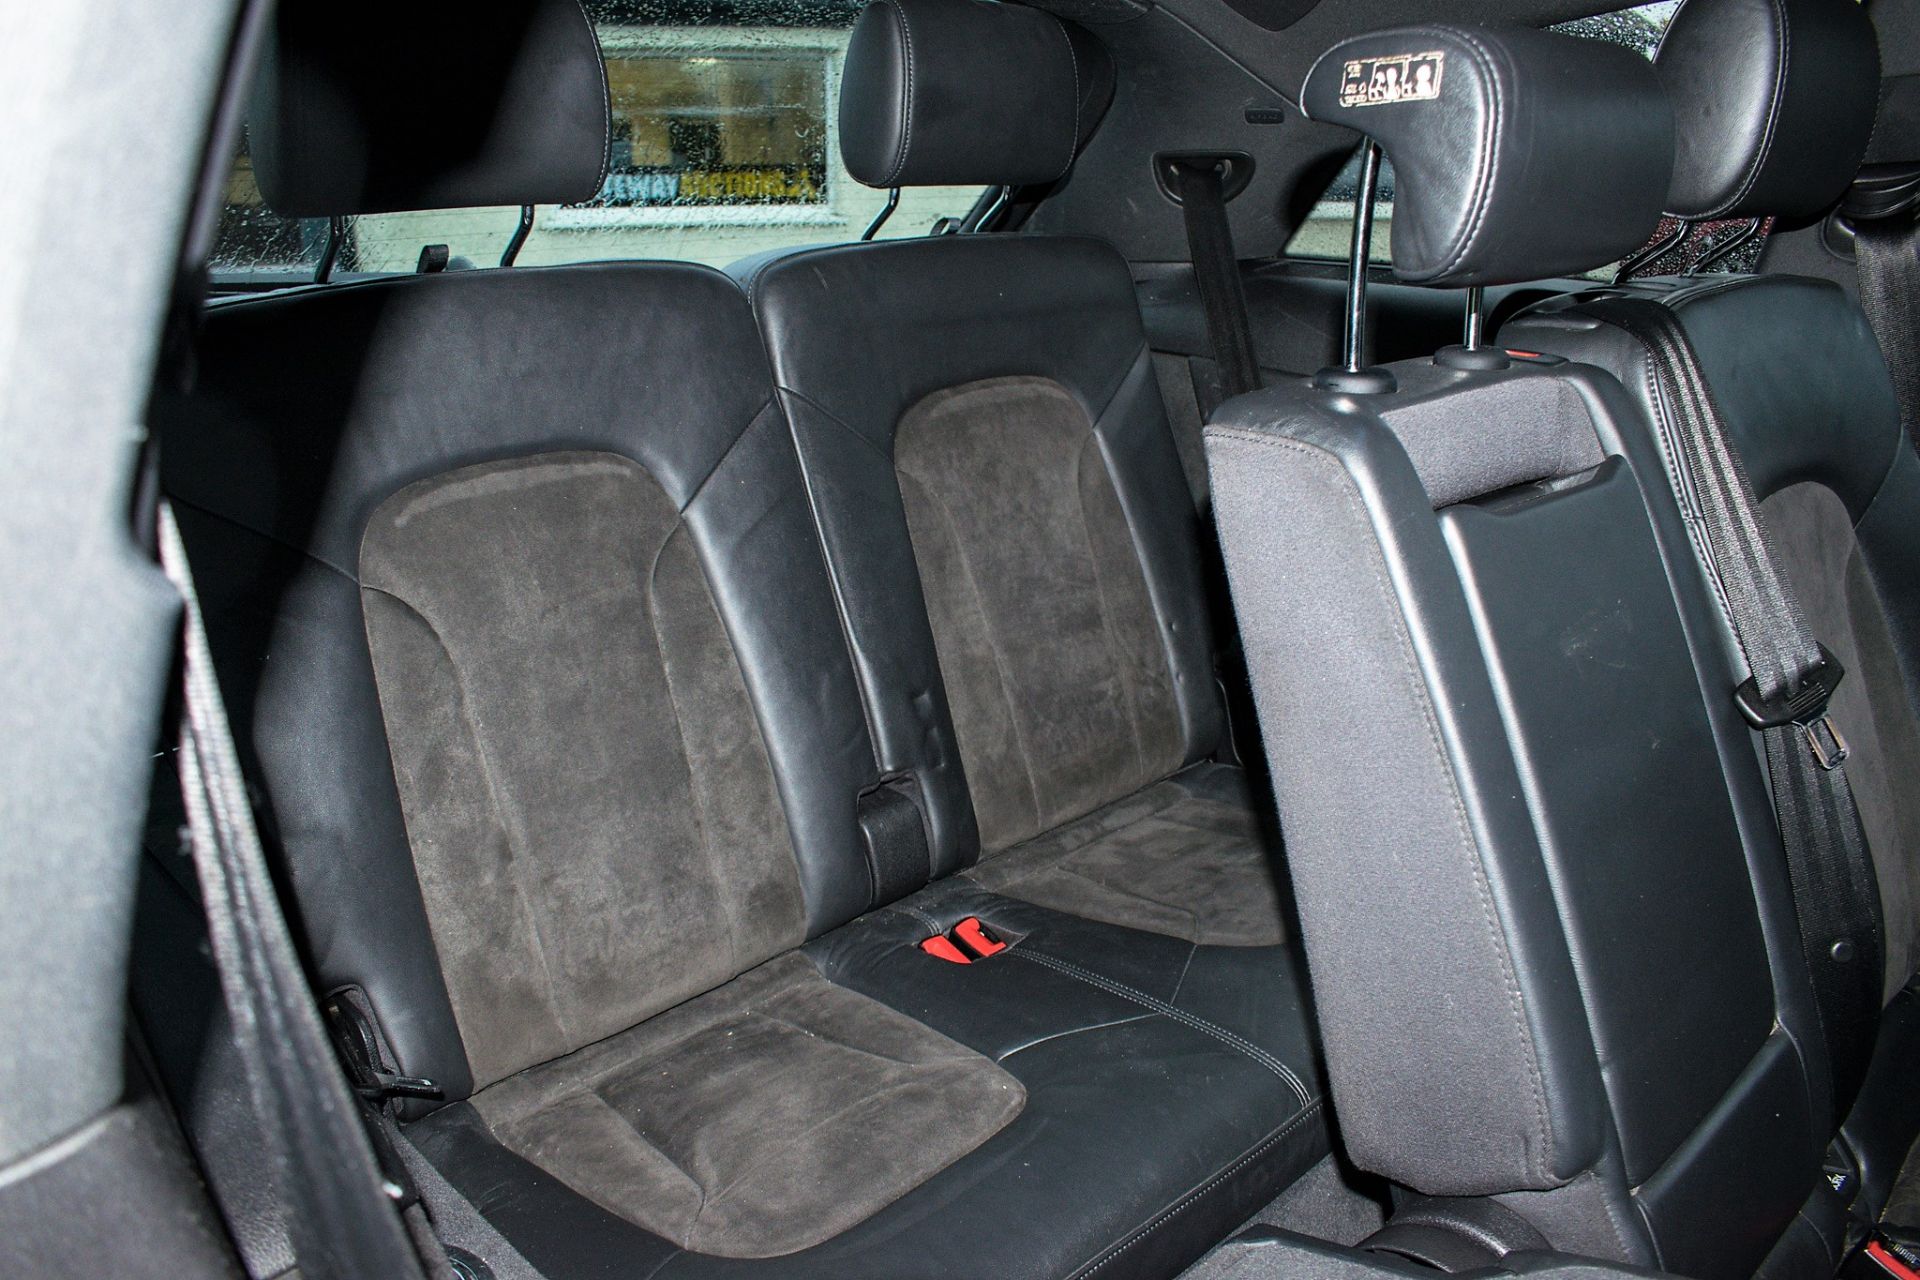 Audi Q7 3.0 TDi S-Line Auto 5 door sports utility vehicle - Image 18 of 22